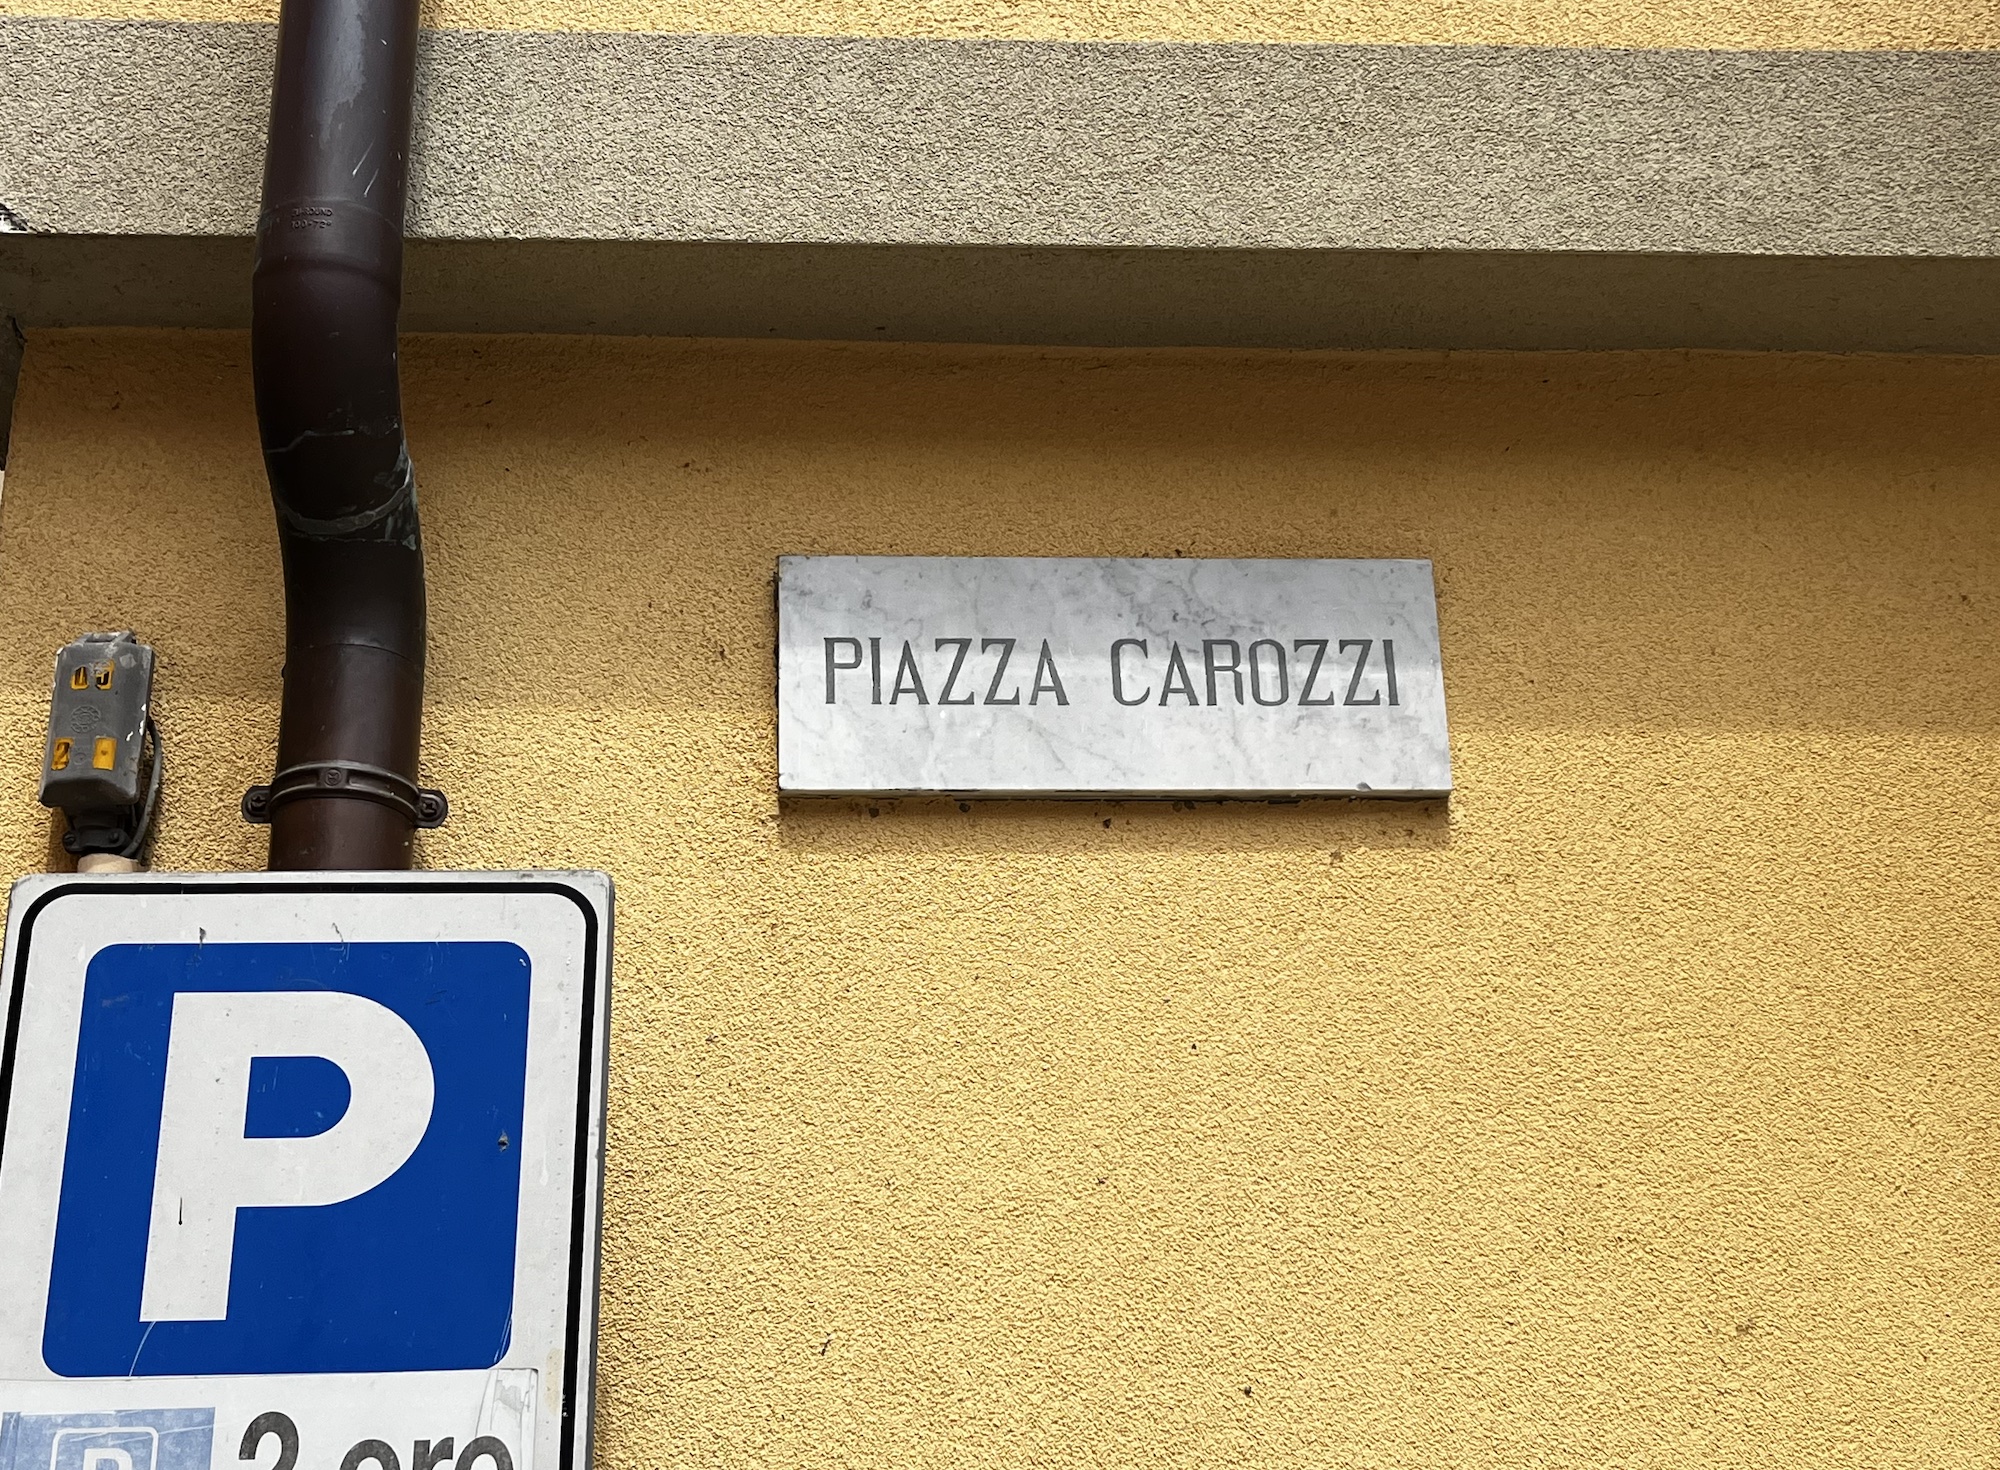 PiazzaCarozzi_Brivio.jpg (1.55 MB)